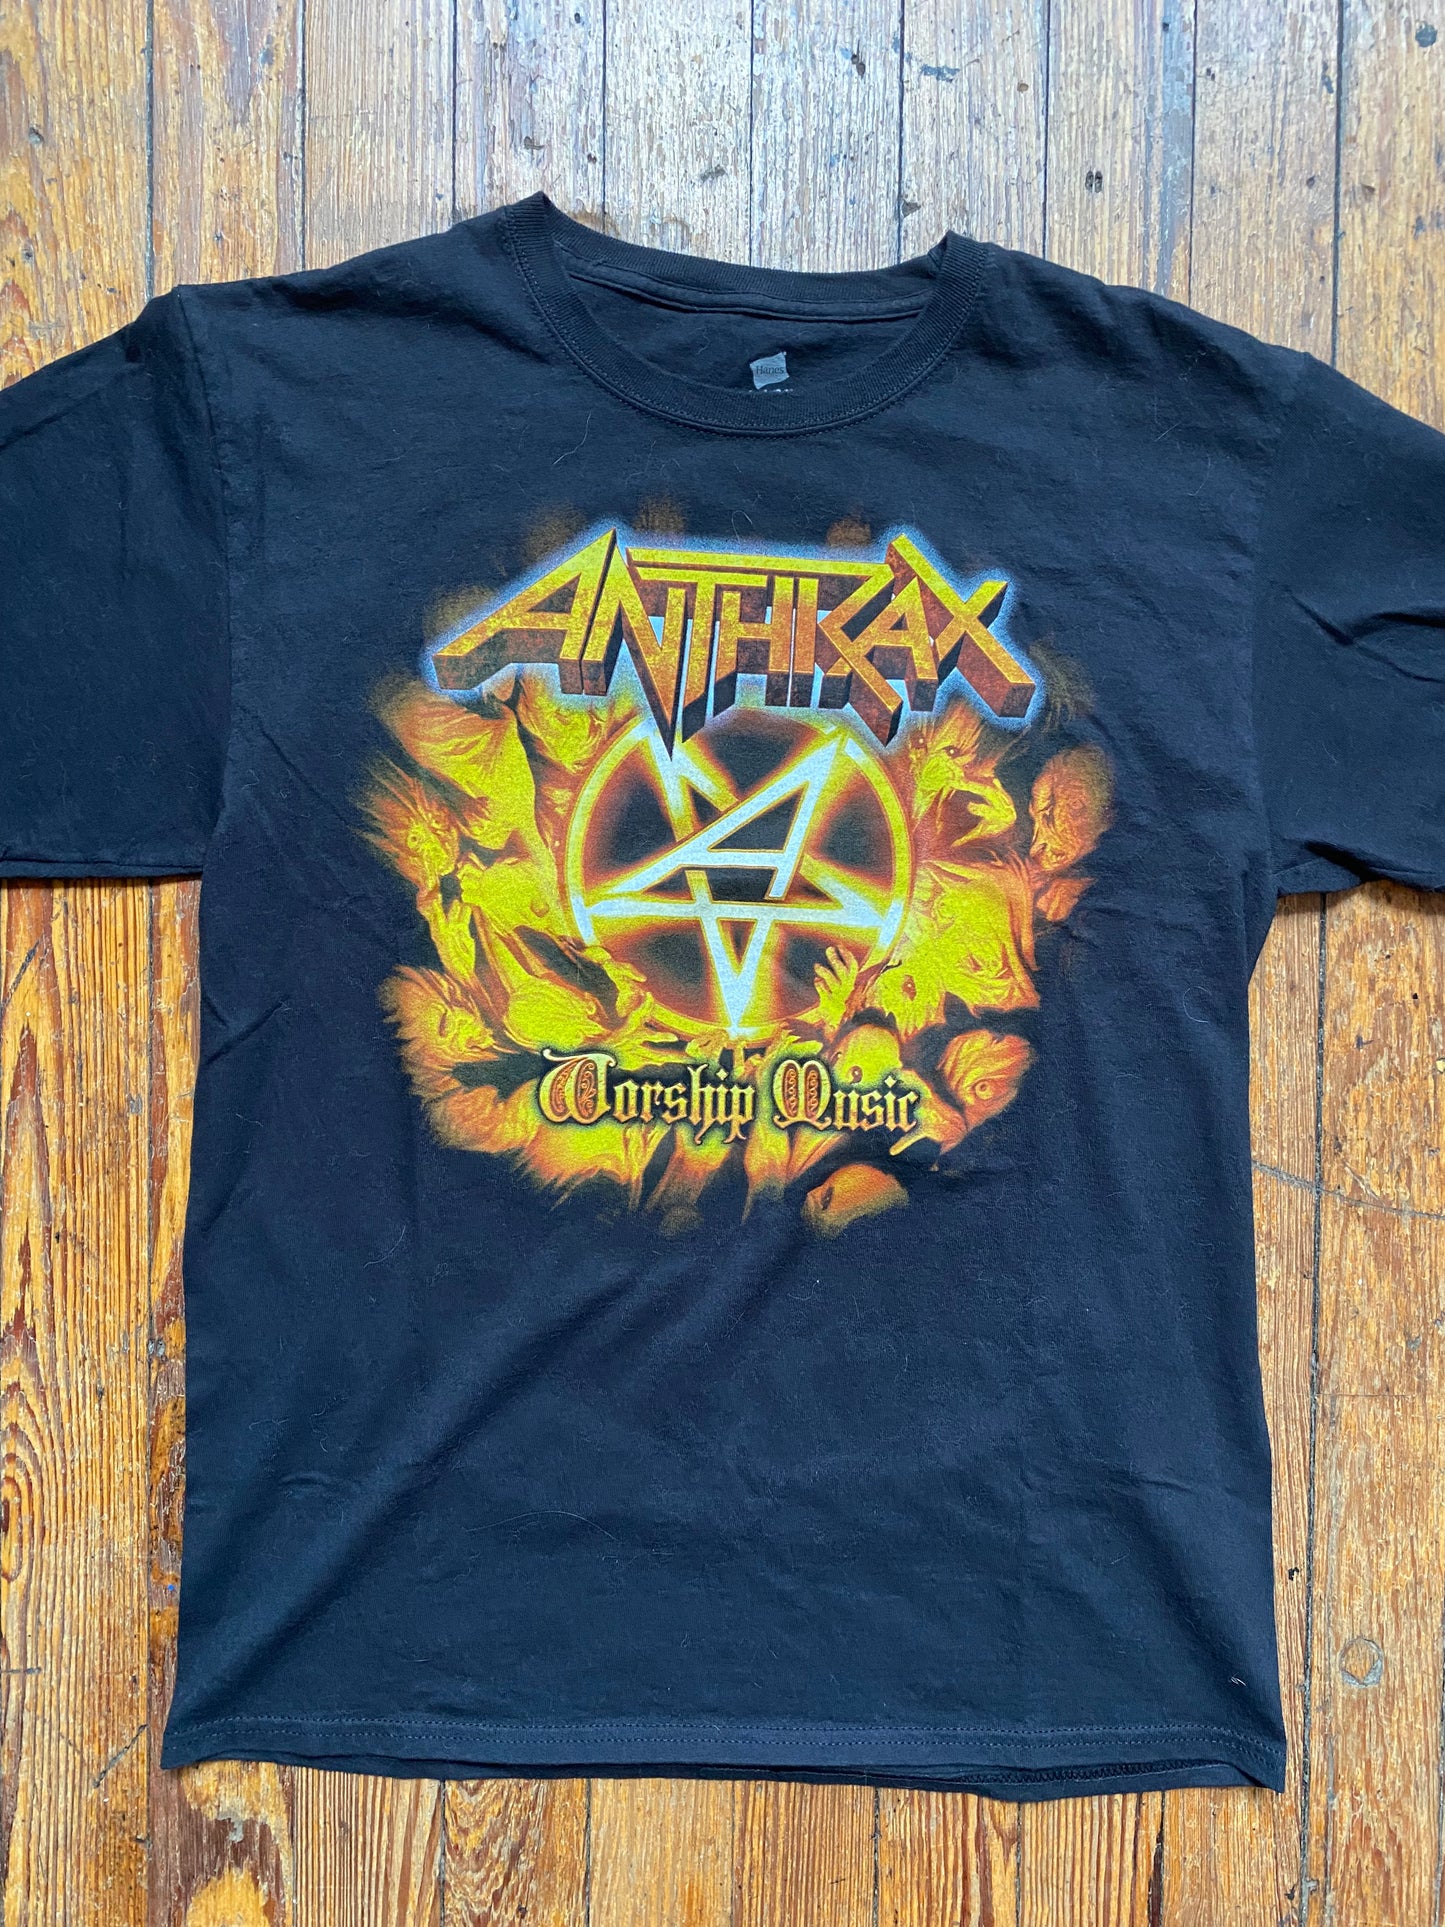 Anthrax “Worship Music” 2011-2012 World Tour Shirt